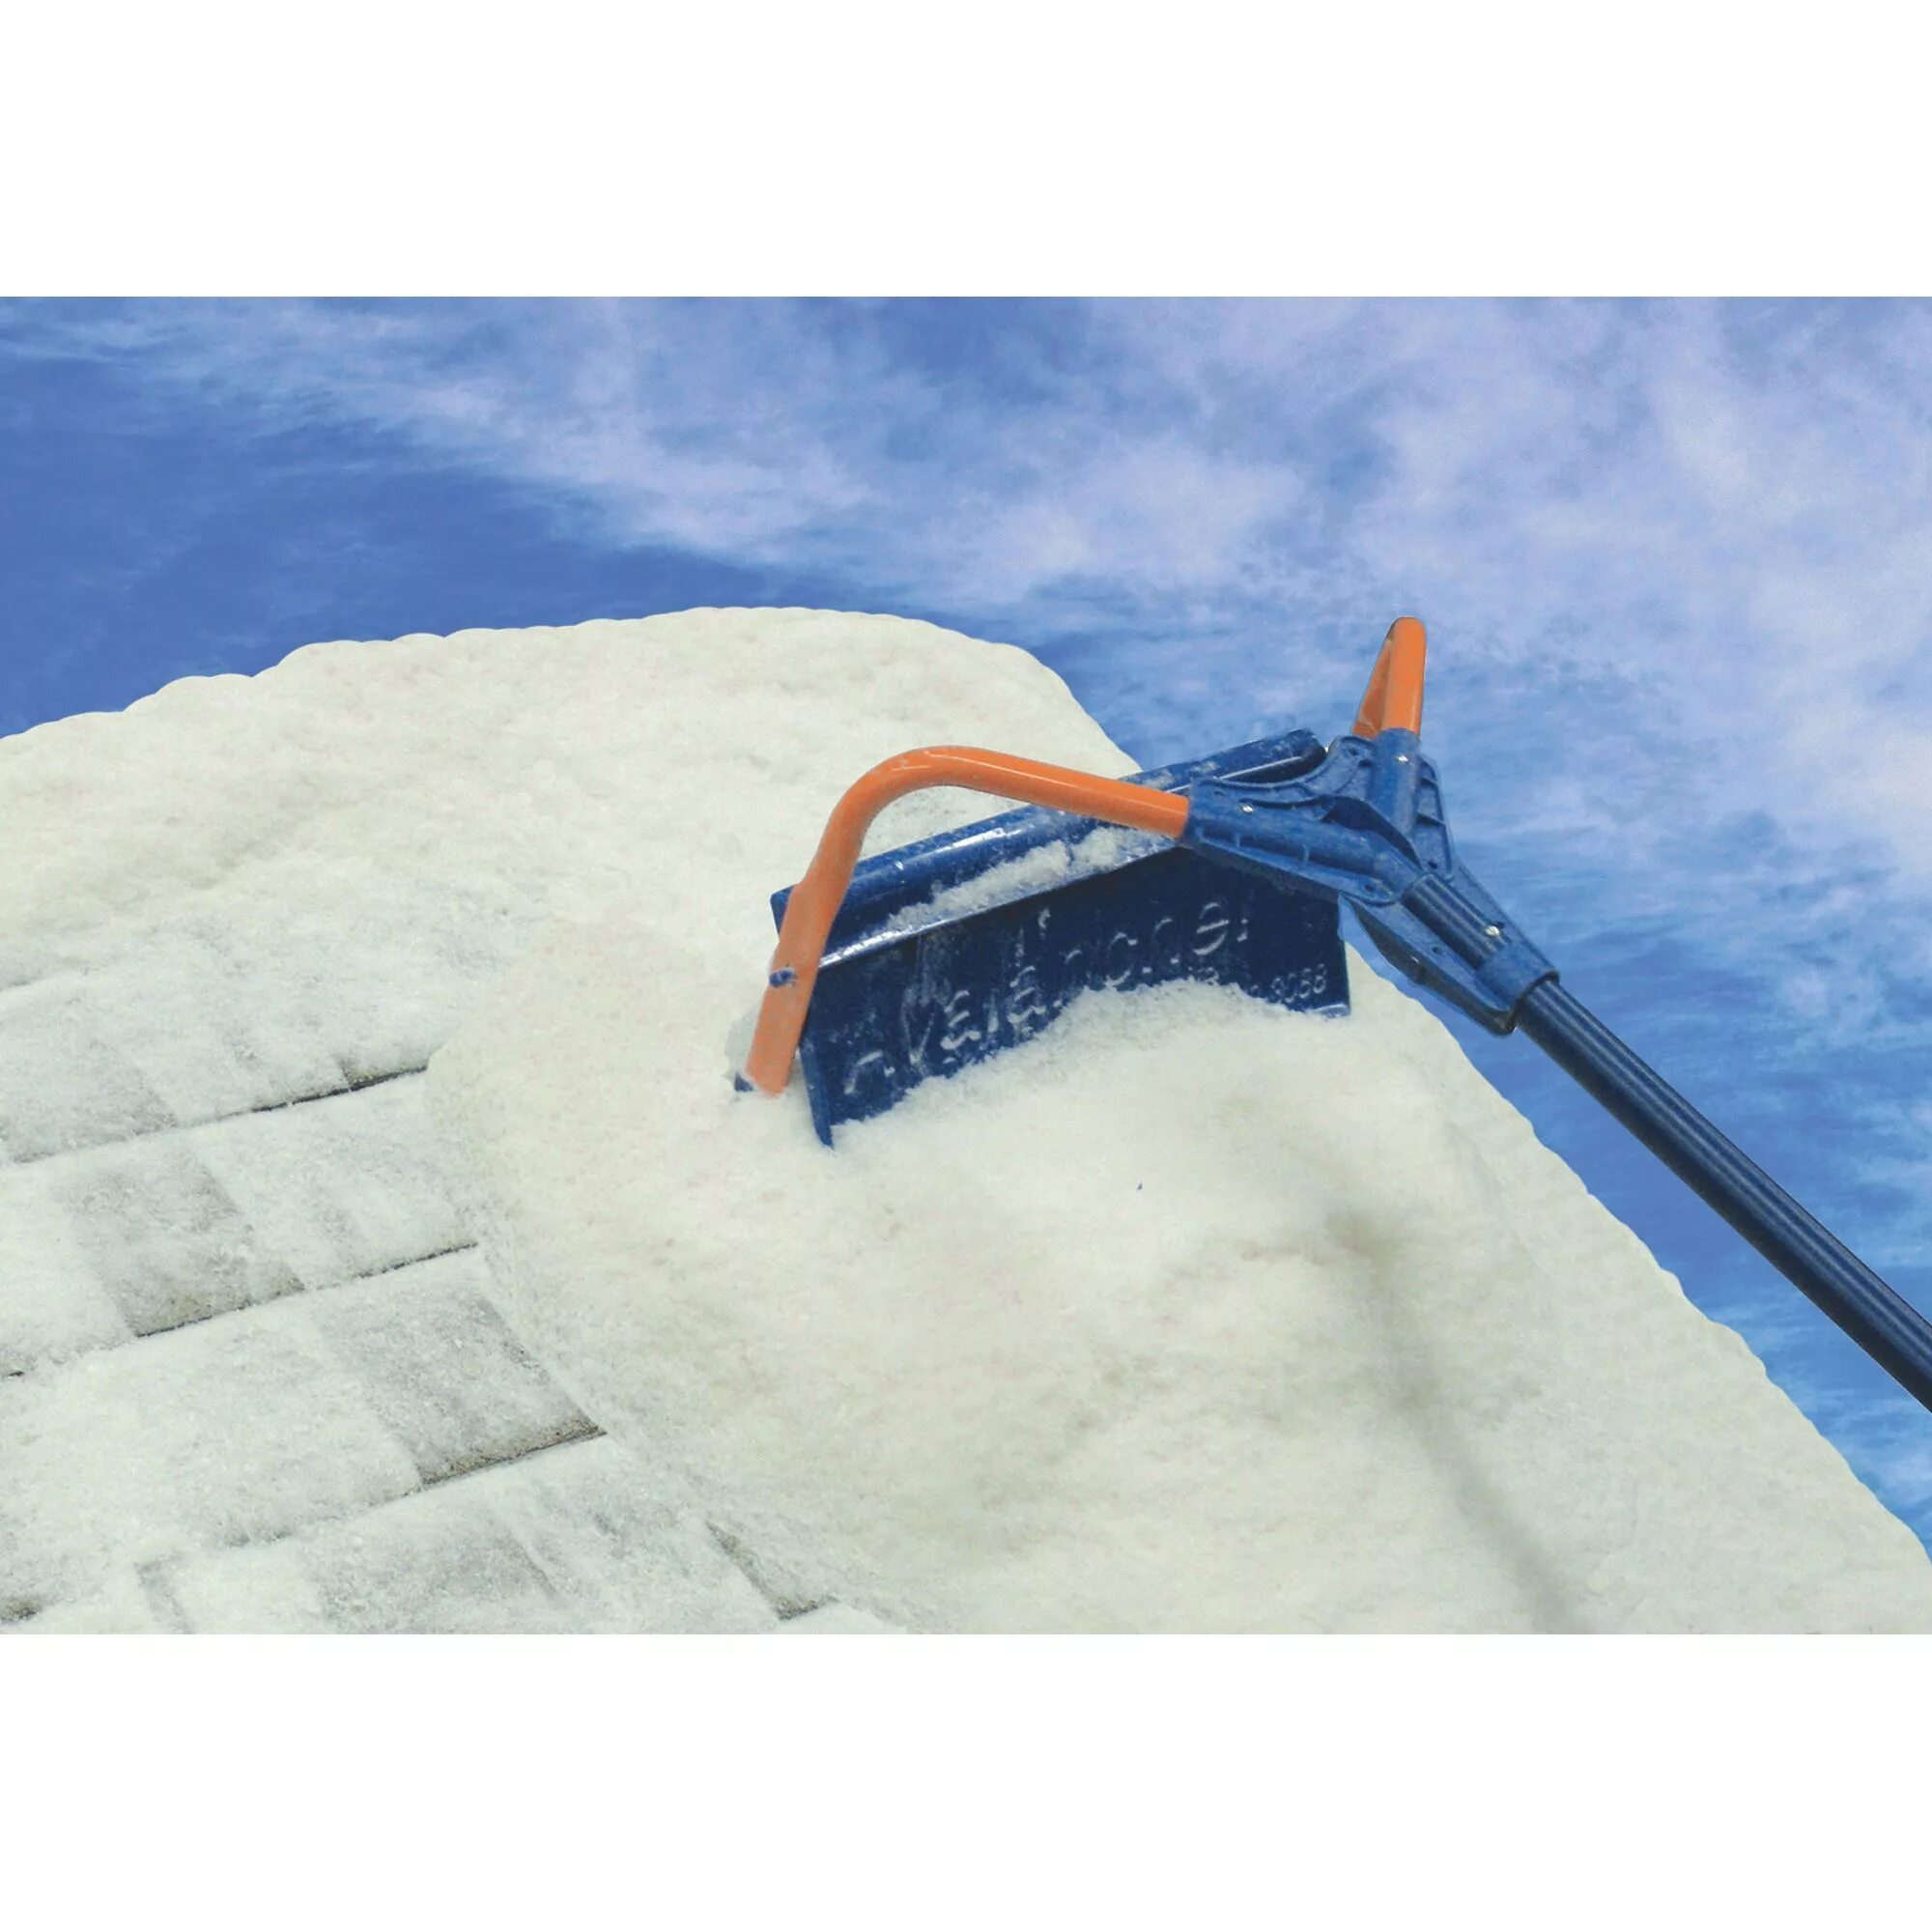 Лопата Avalanche Wheeled Roof Rake, model# ava500. Скребок для уборки снега с крыши с тканью 1,9-6,3м 11646. Приспособа для уборки снега с крыши. Avalanche Snow Rake. Для очистки снега с крыши